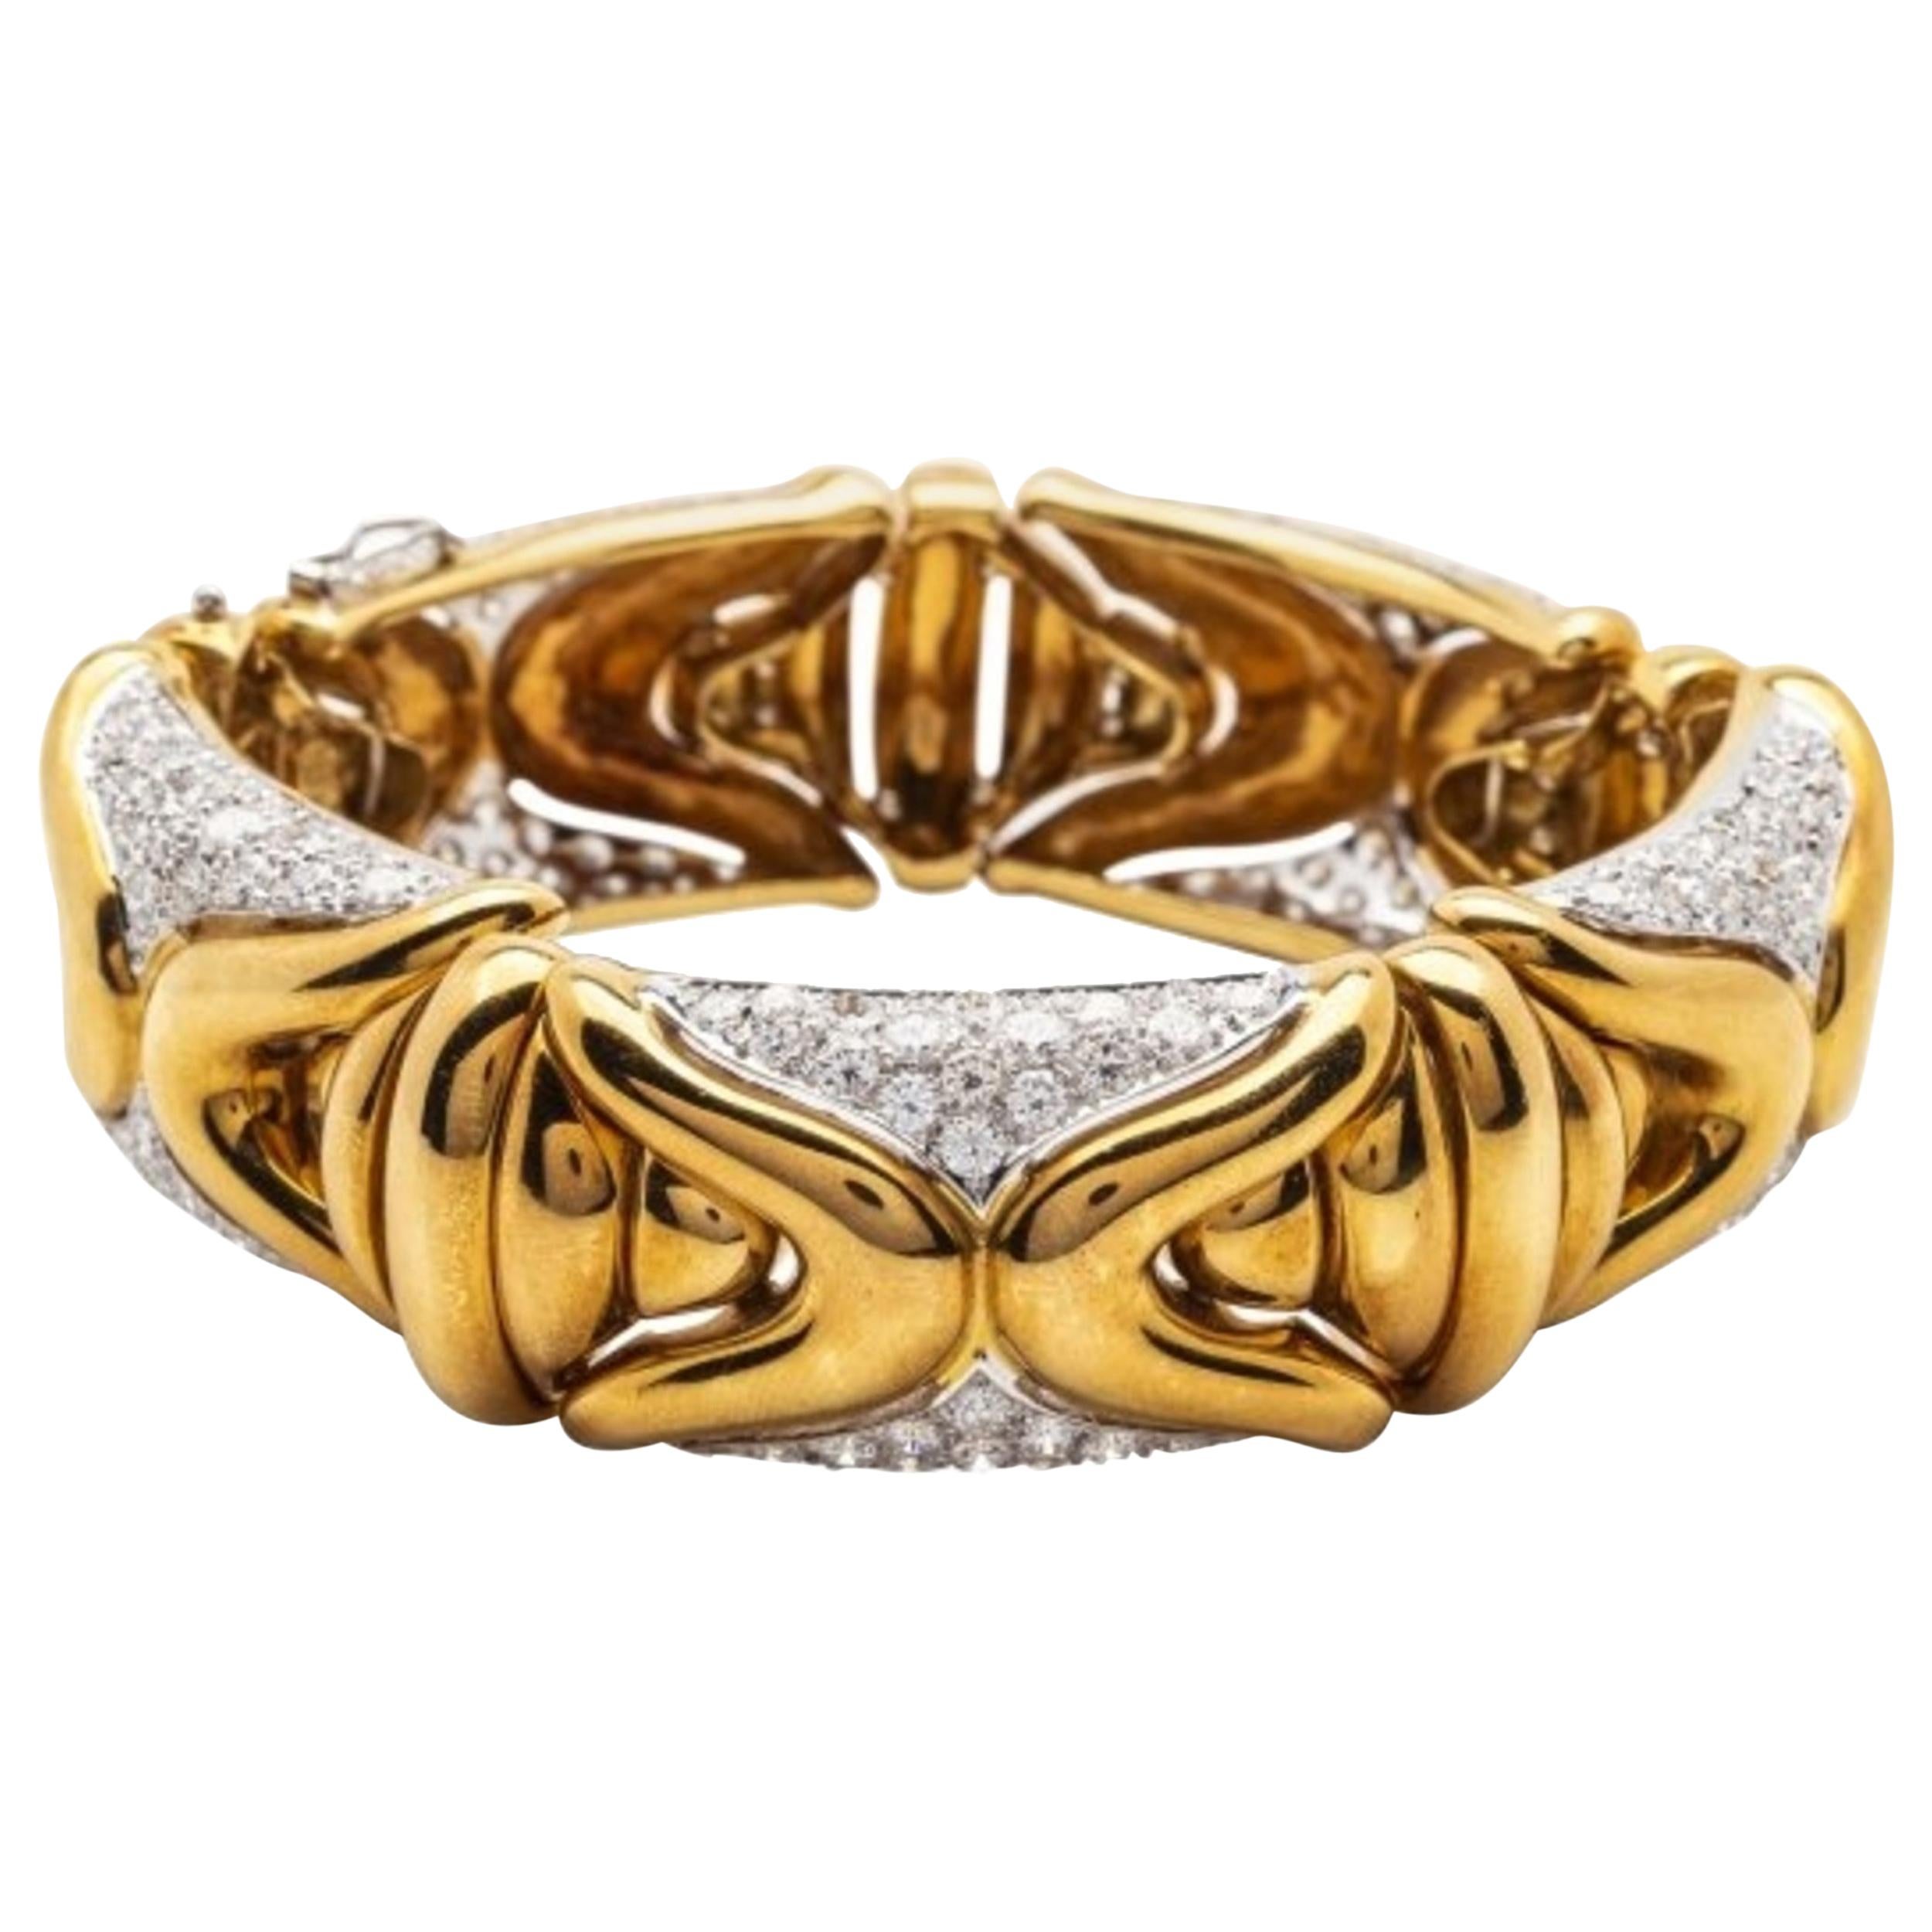 Gorgeous 5.10 Carat, Gold and Diamond Bracelet, 18 Karat